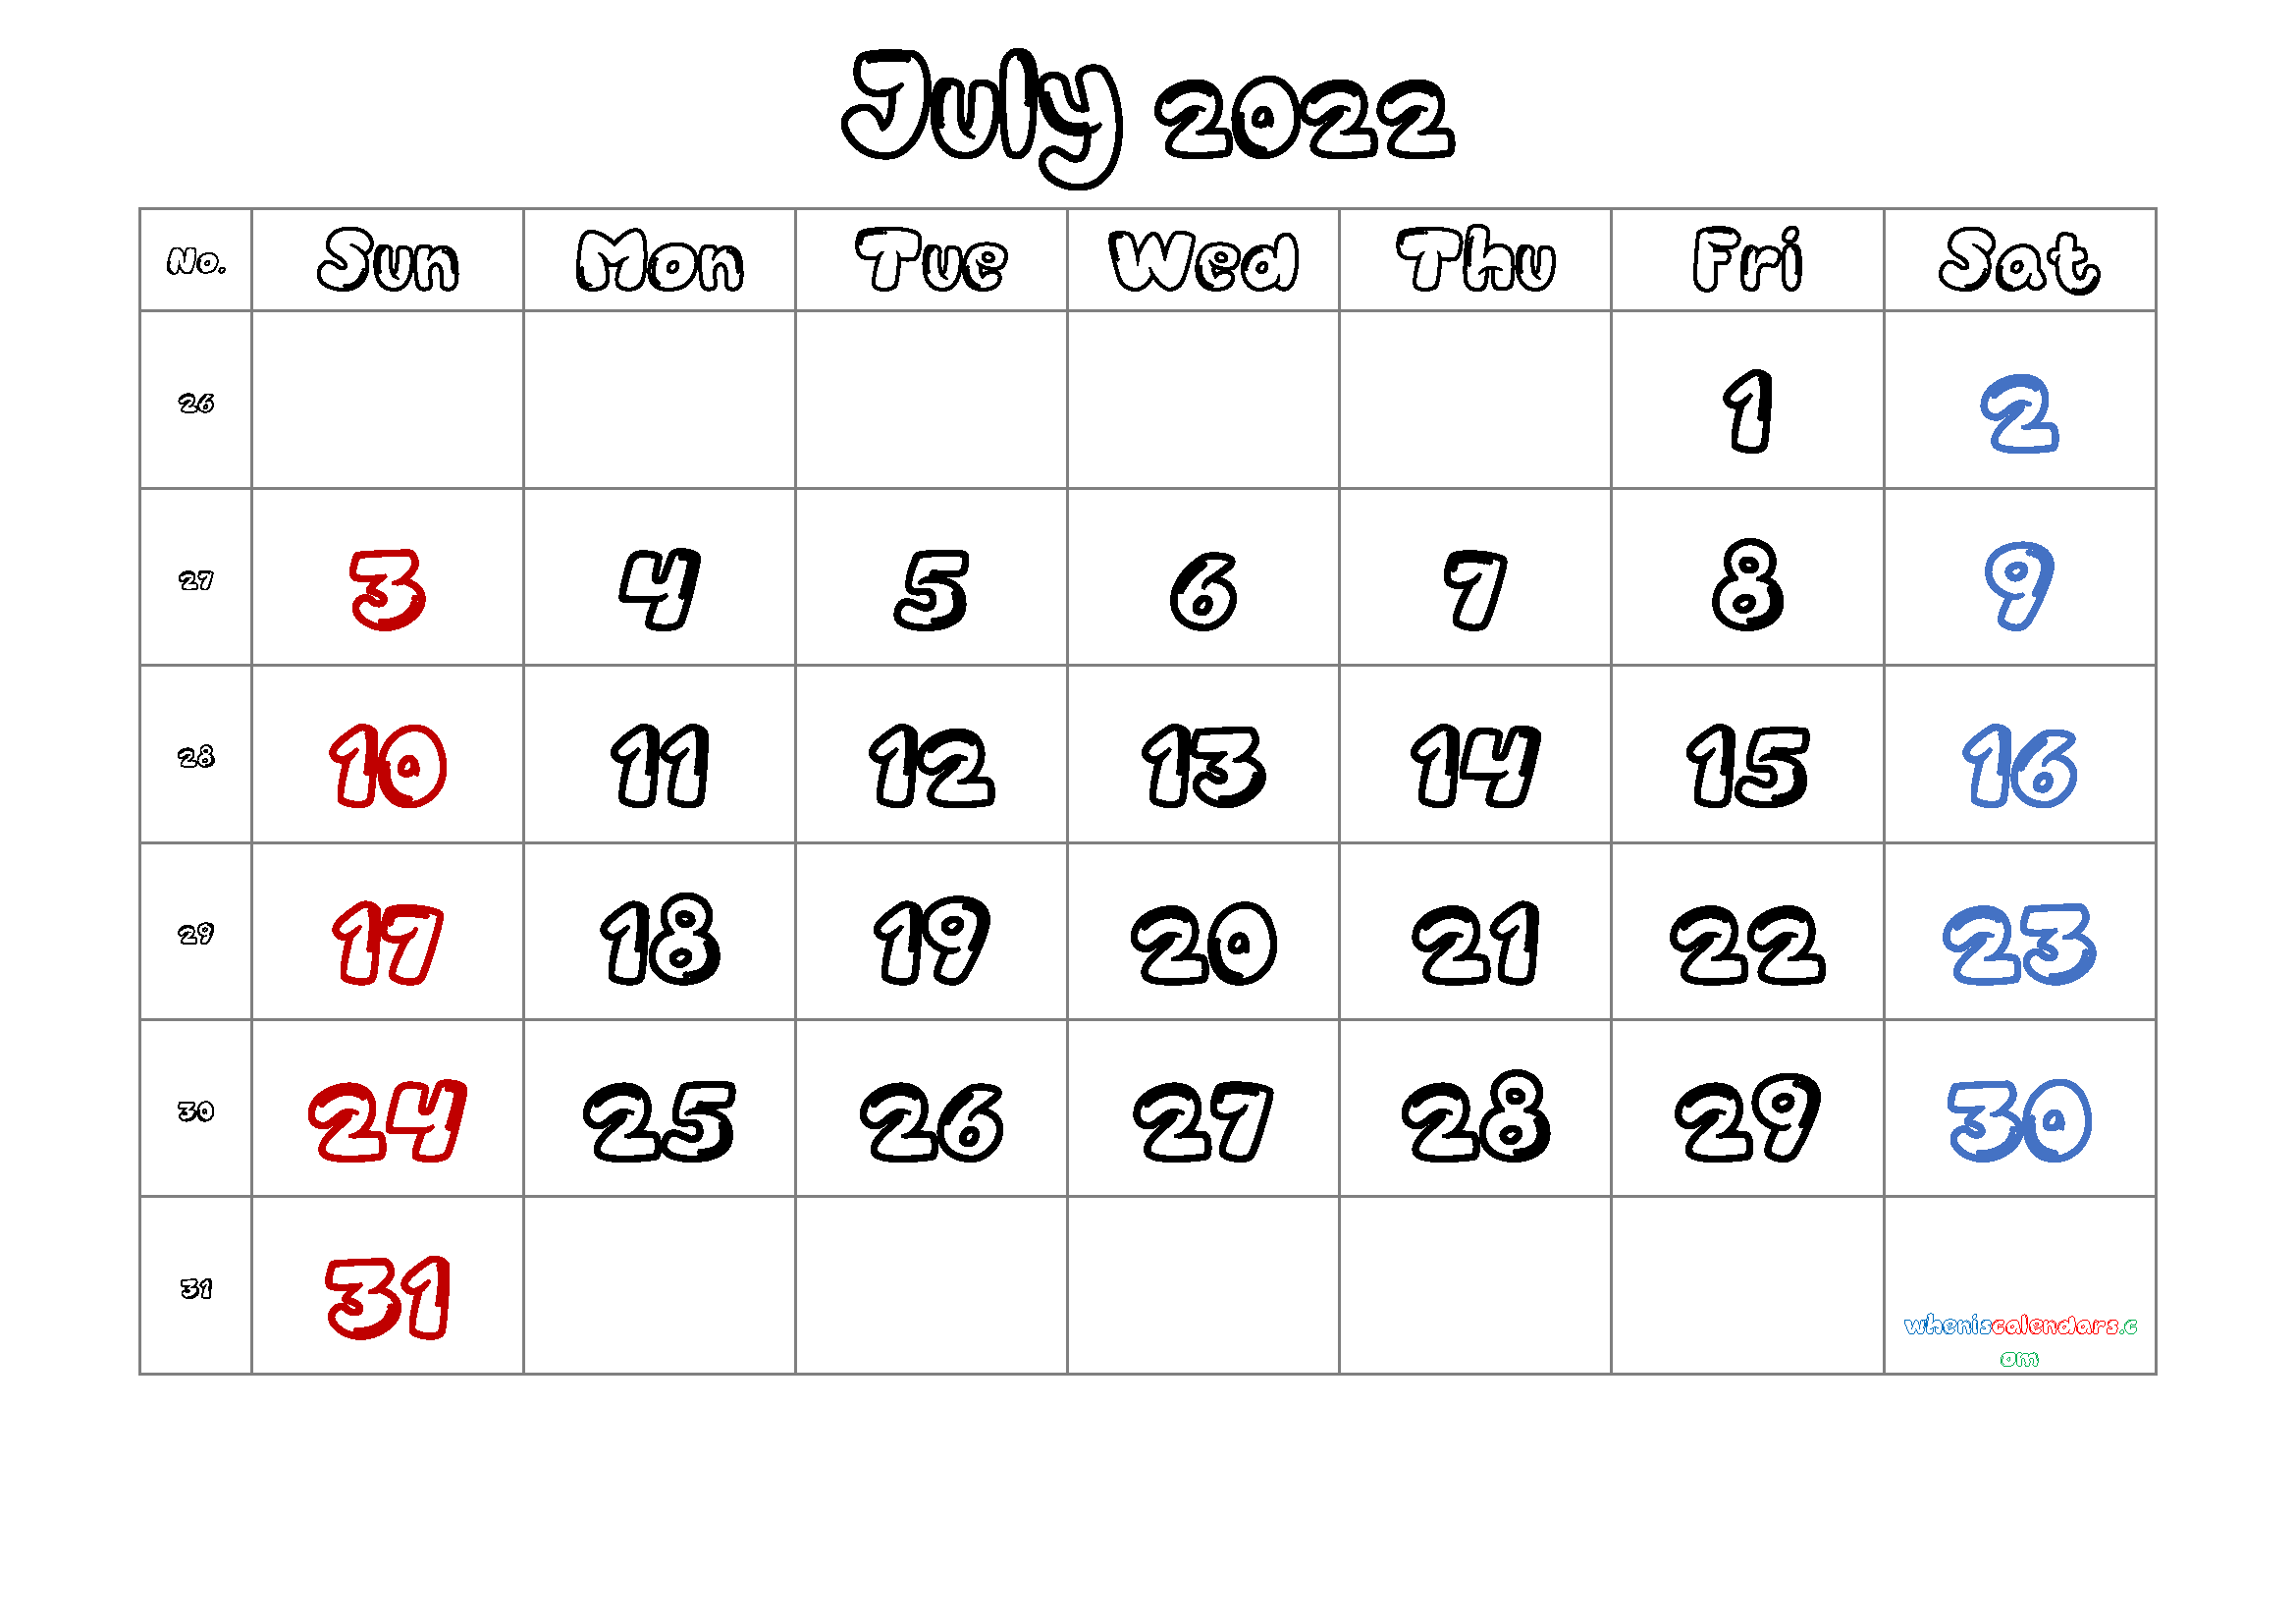 Free July Blank Calendar 2022